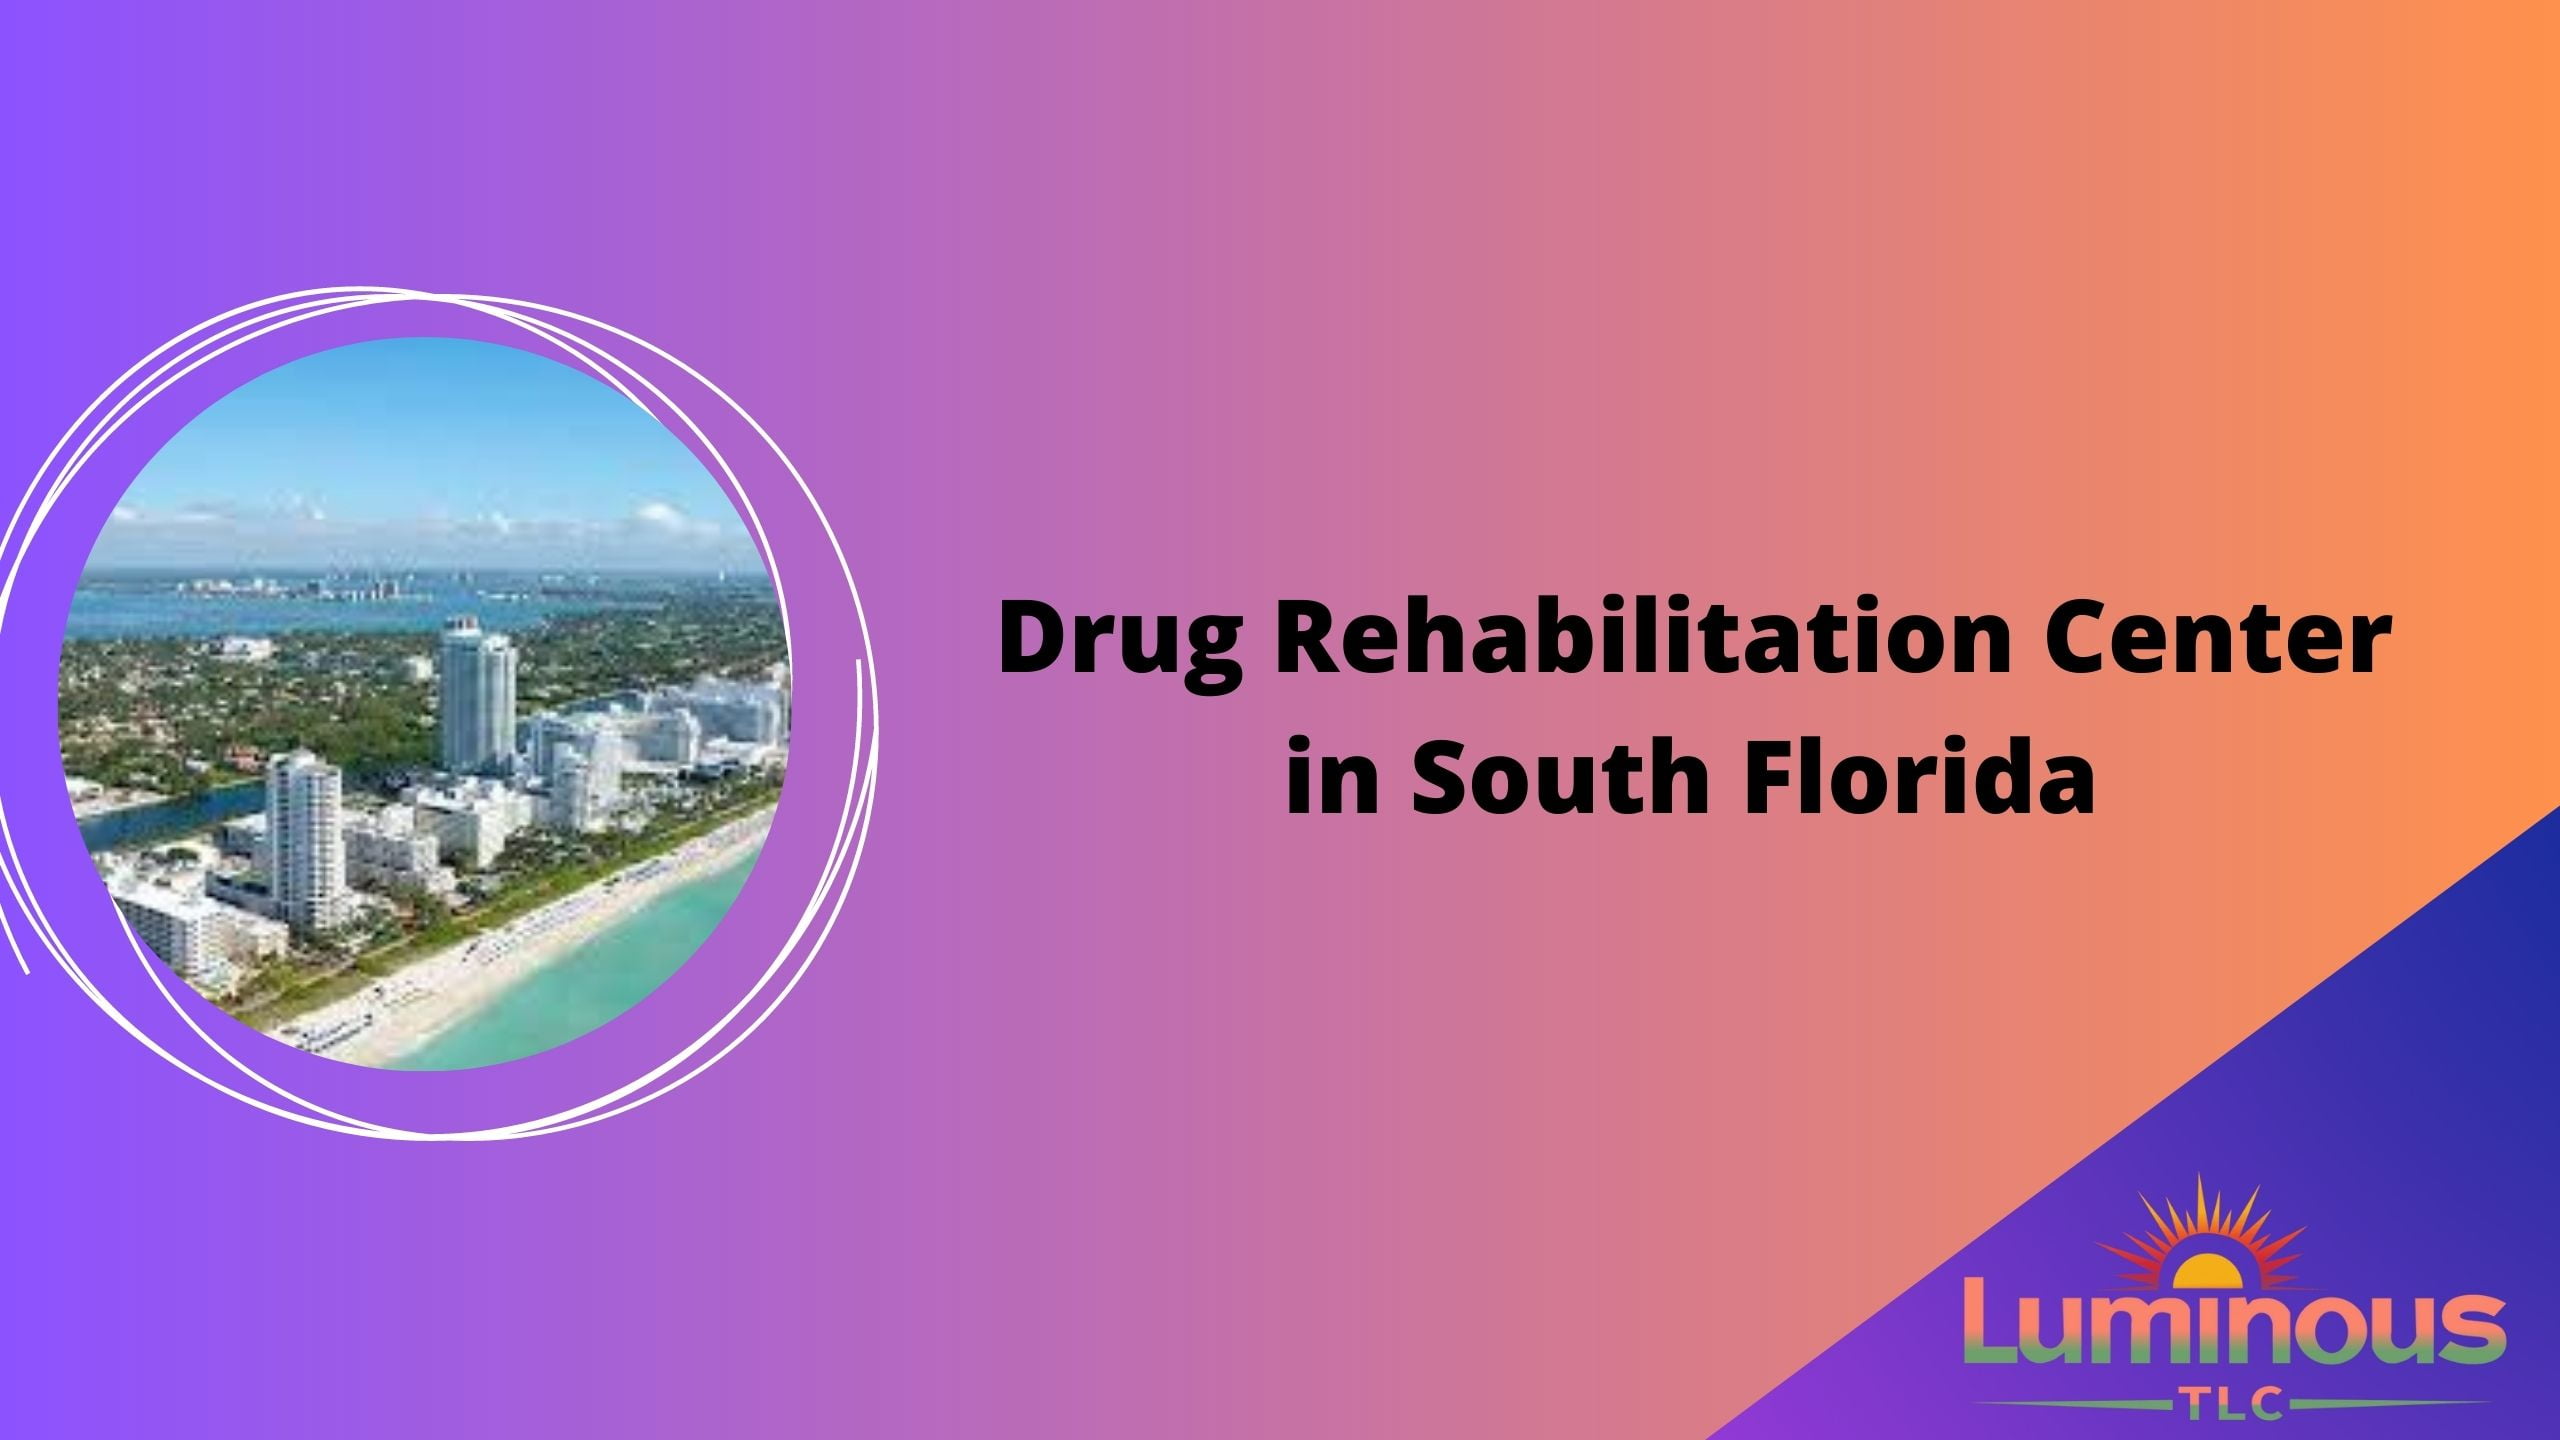 Drug rehabilitation centers in South Florida